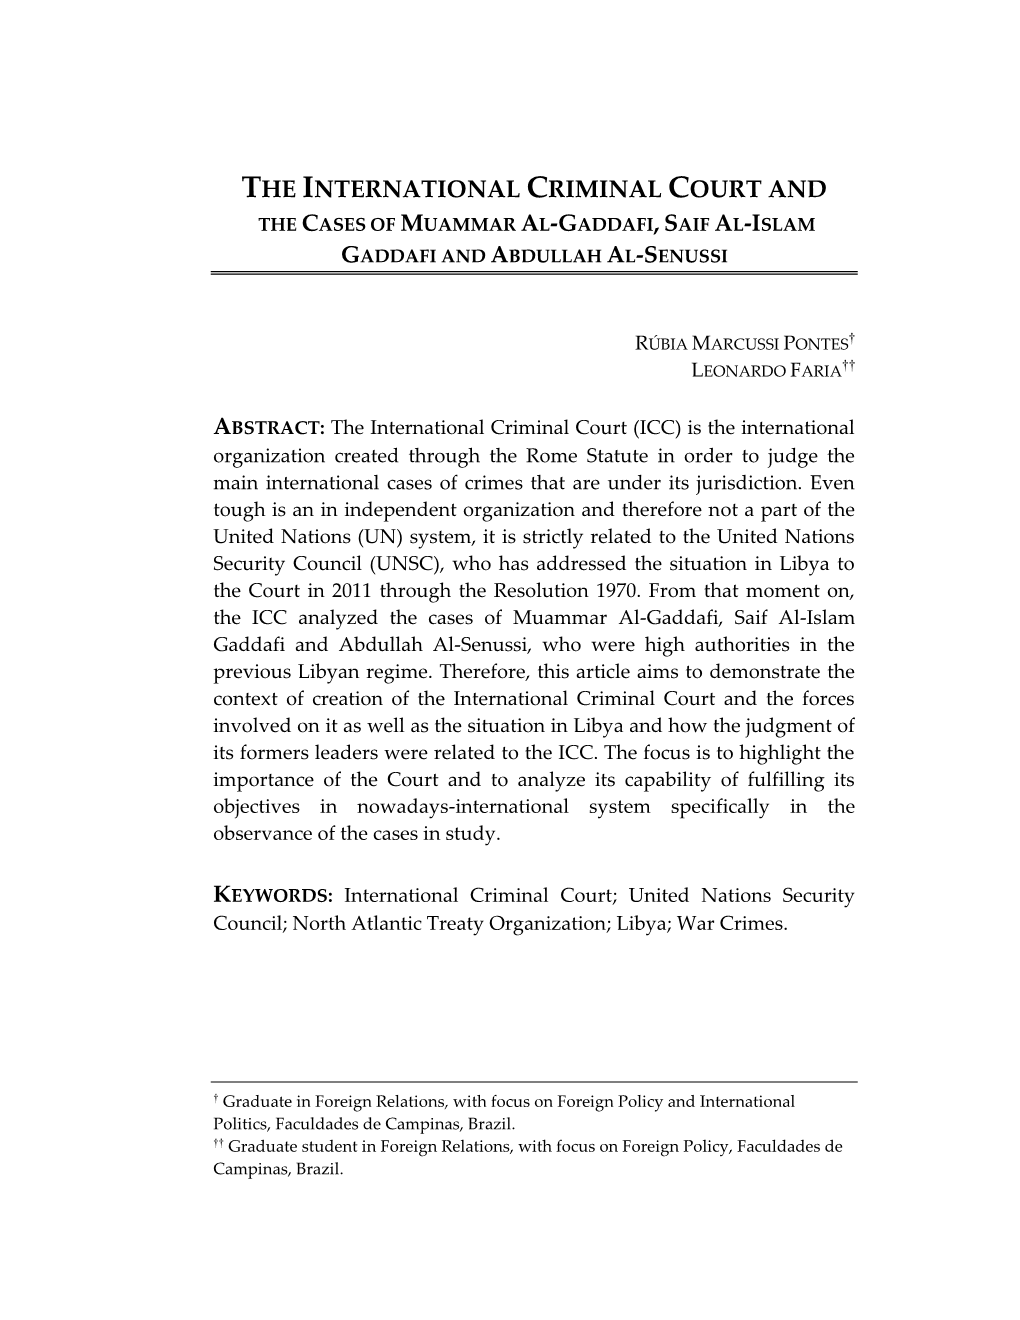 The International Criminal Court and the Cases of Muammar Al-Gaddafi, Saif Al-Islam Gaddafi and Abdullah Al-Senussi